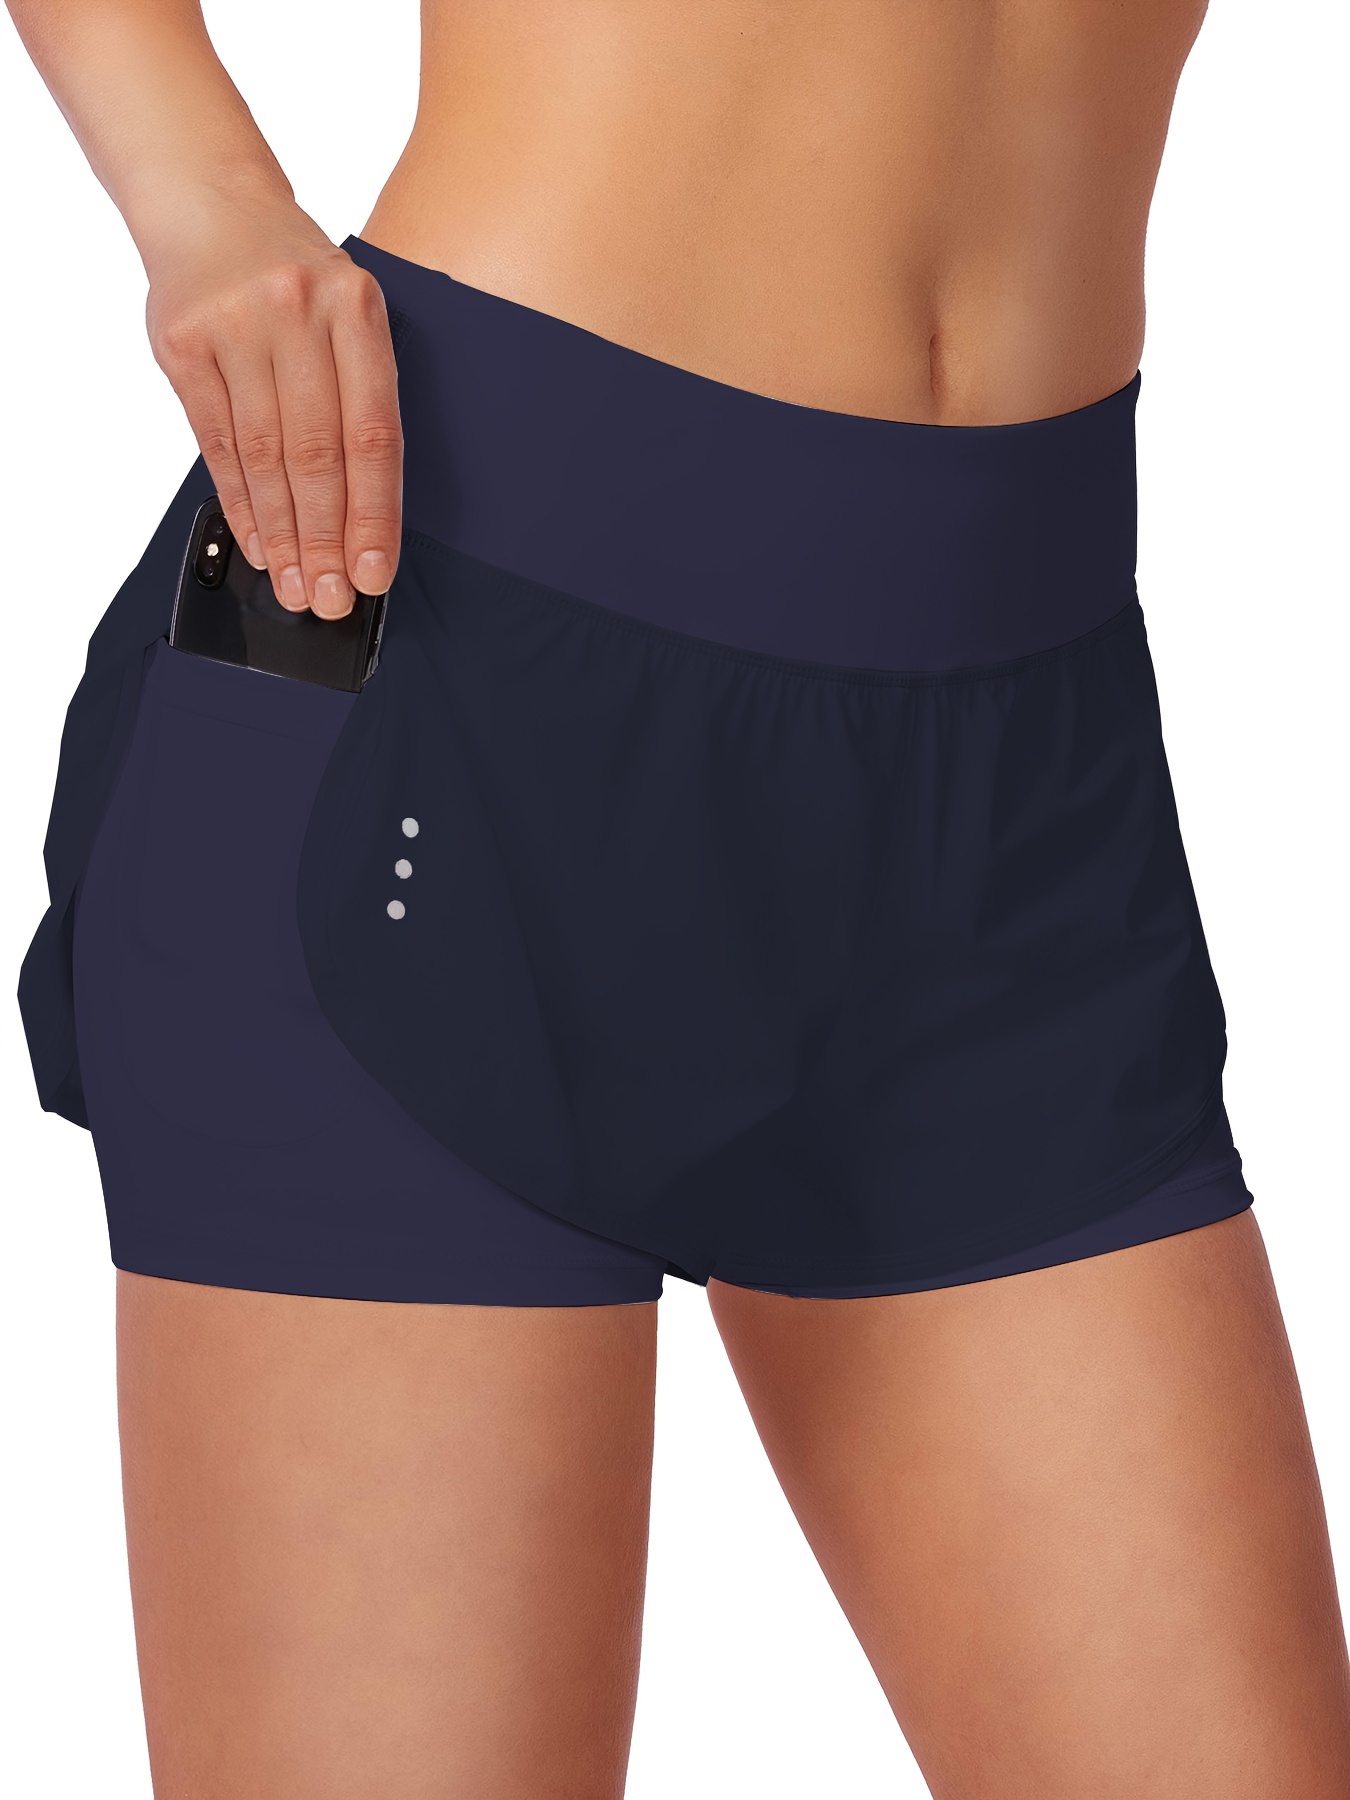 Athletic Shorts Zipper Pockets Women